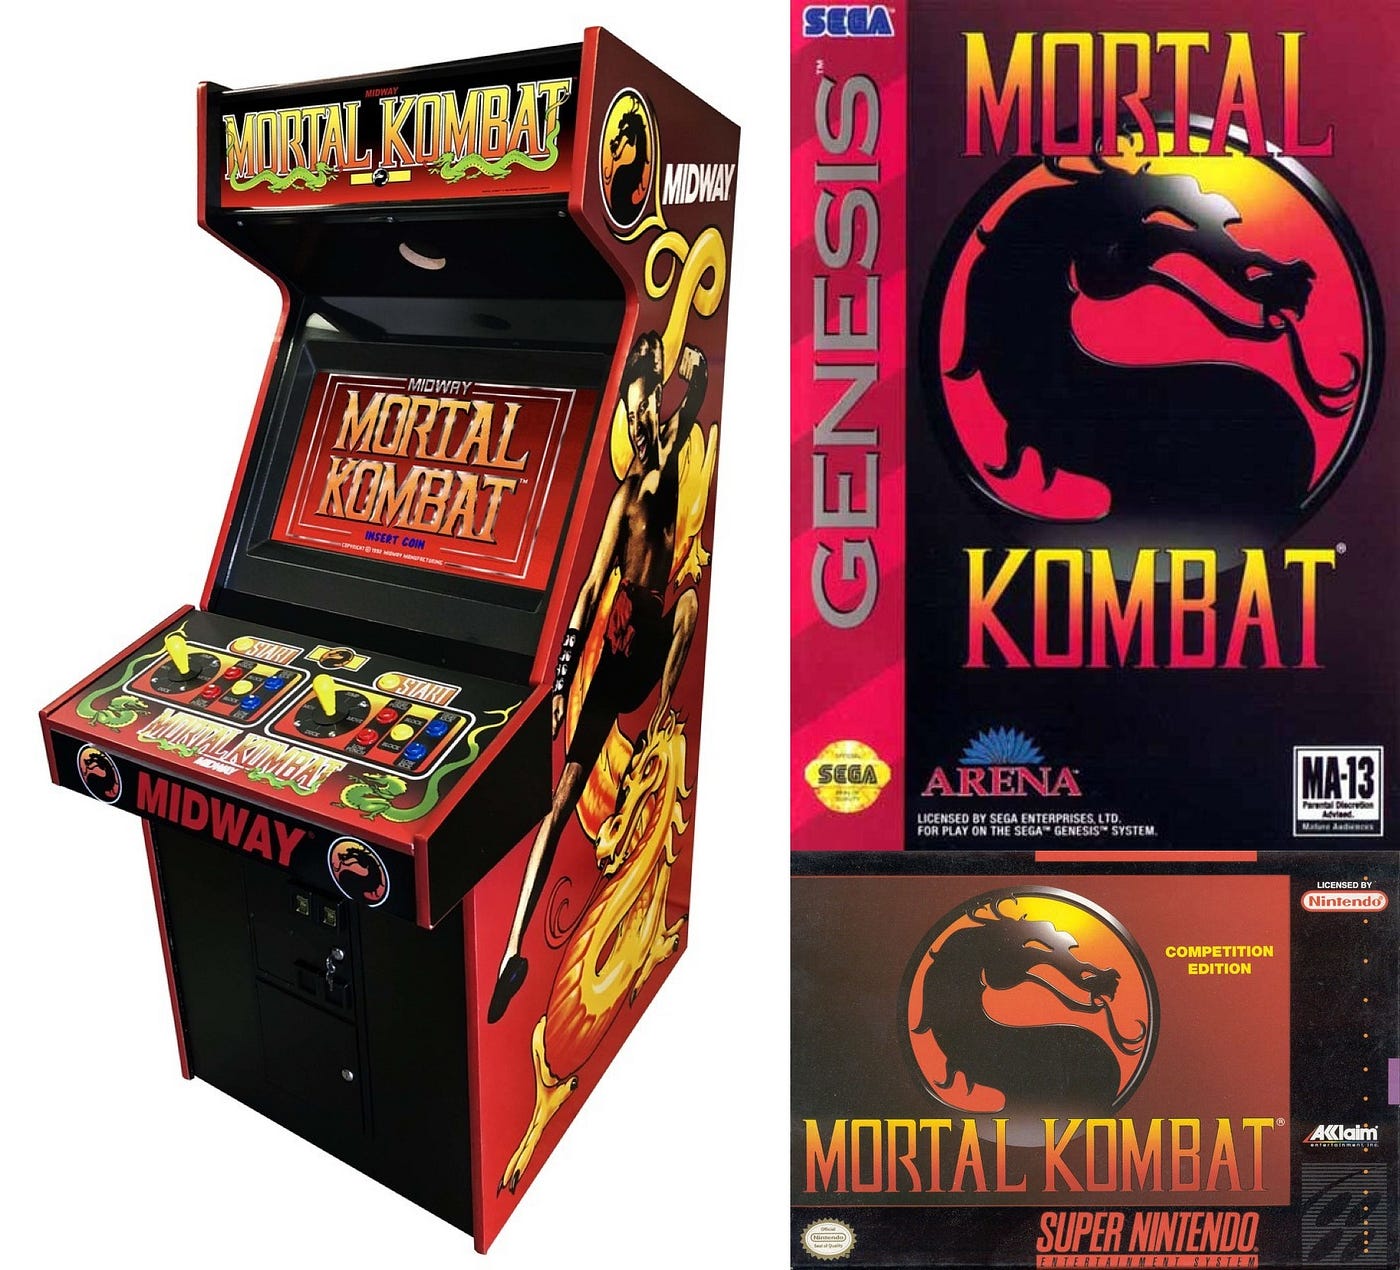 Long Live Mortal Kombat - The Definitive History of MK by David L. Craddock  — Kickstarter